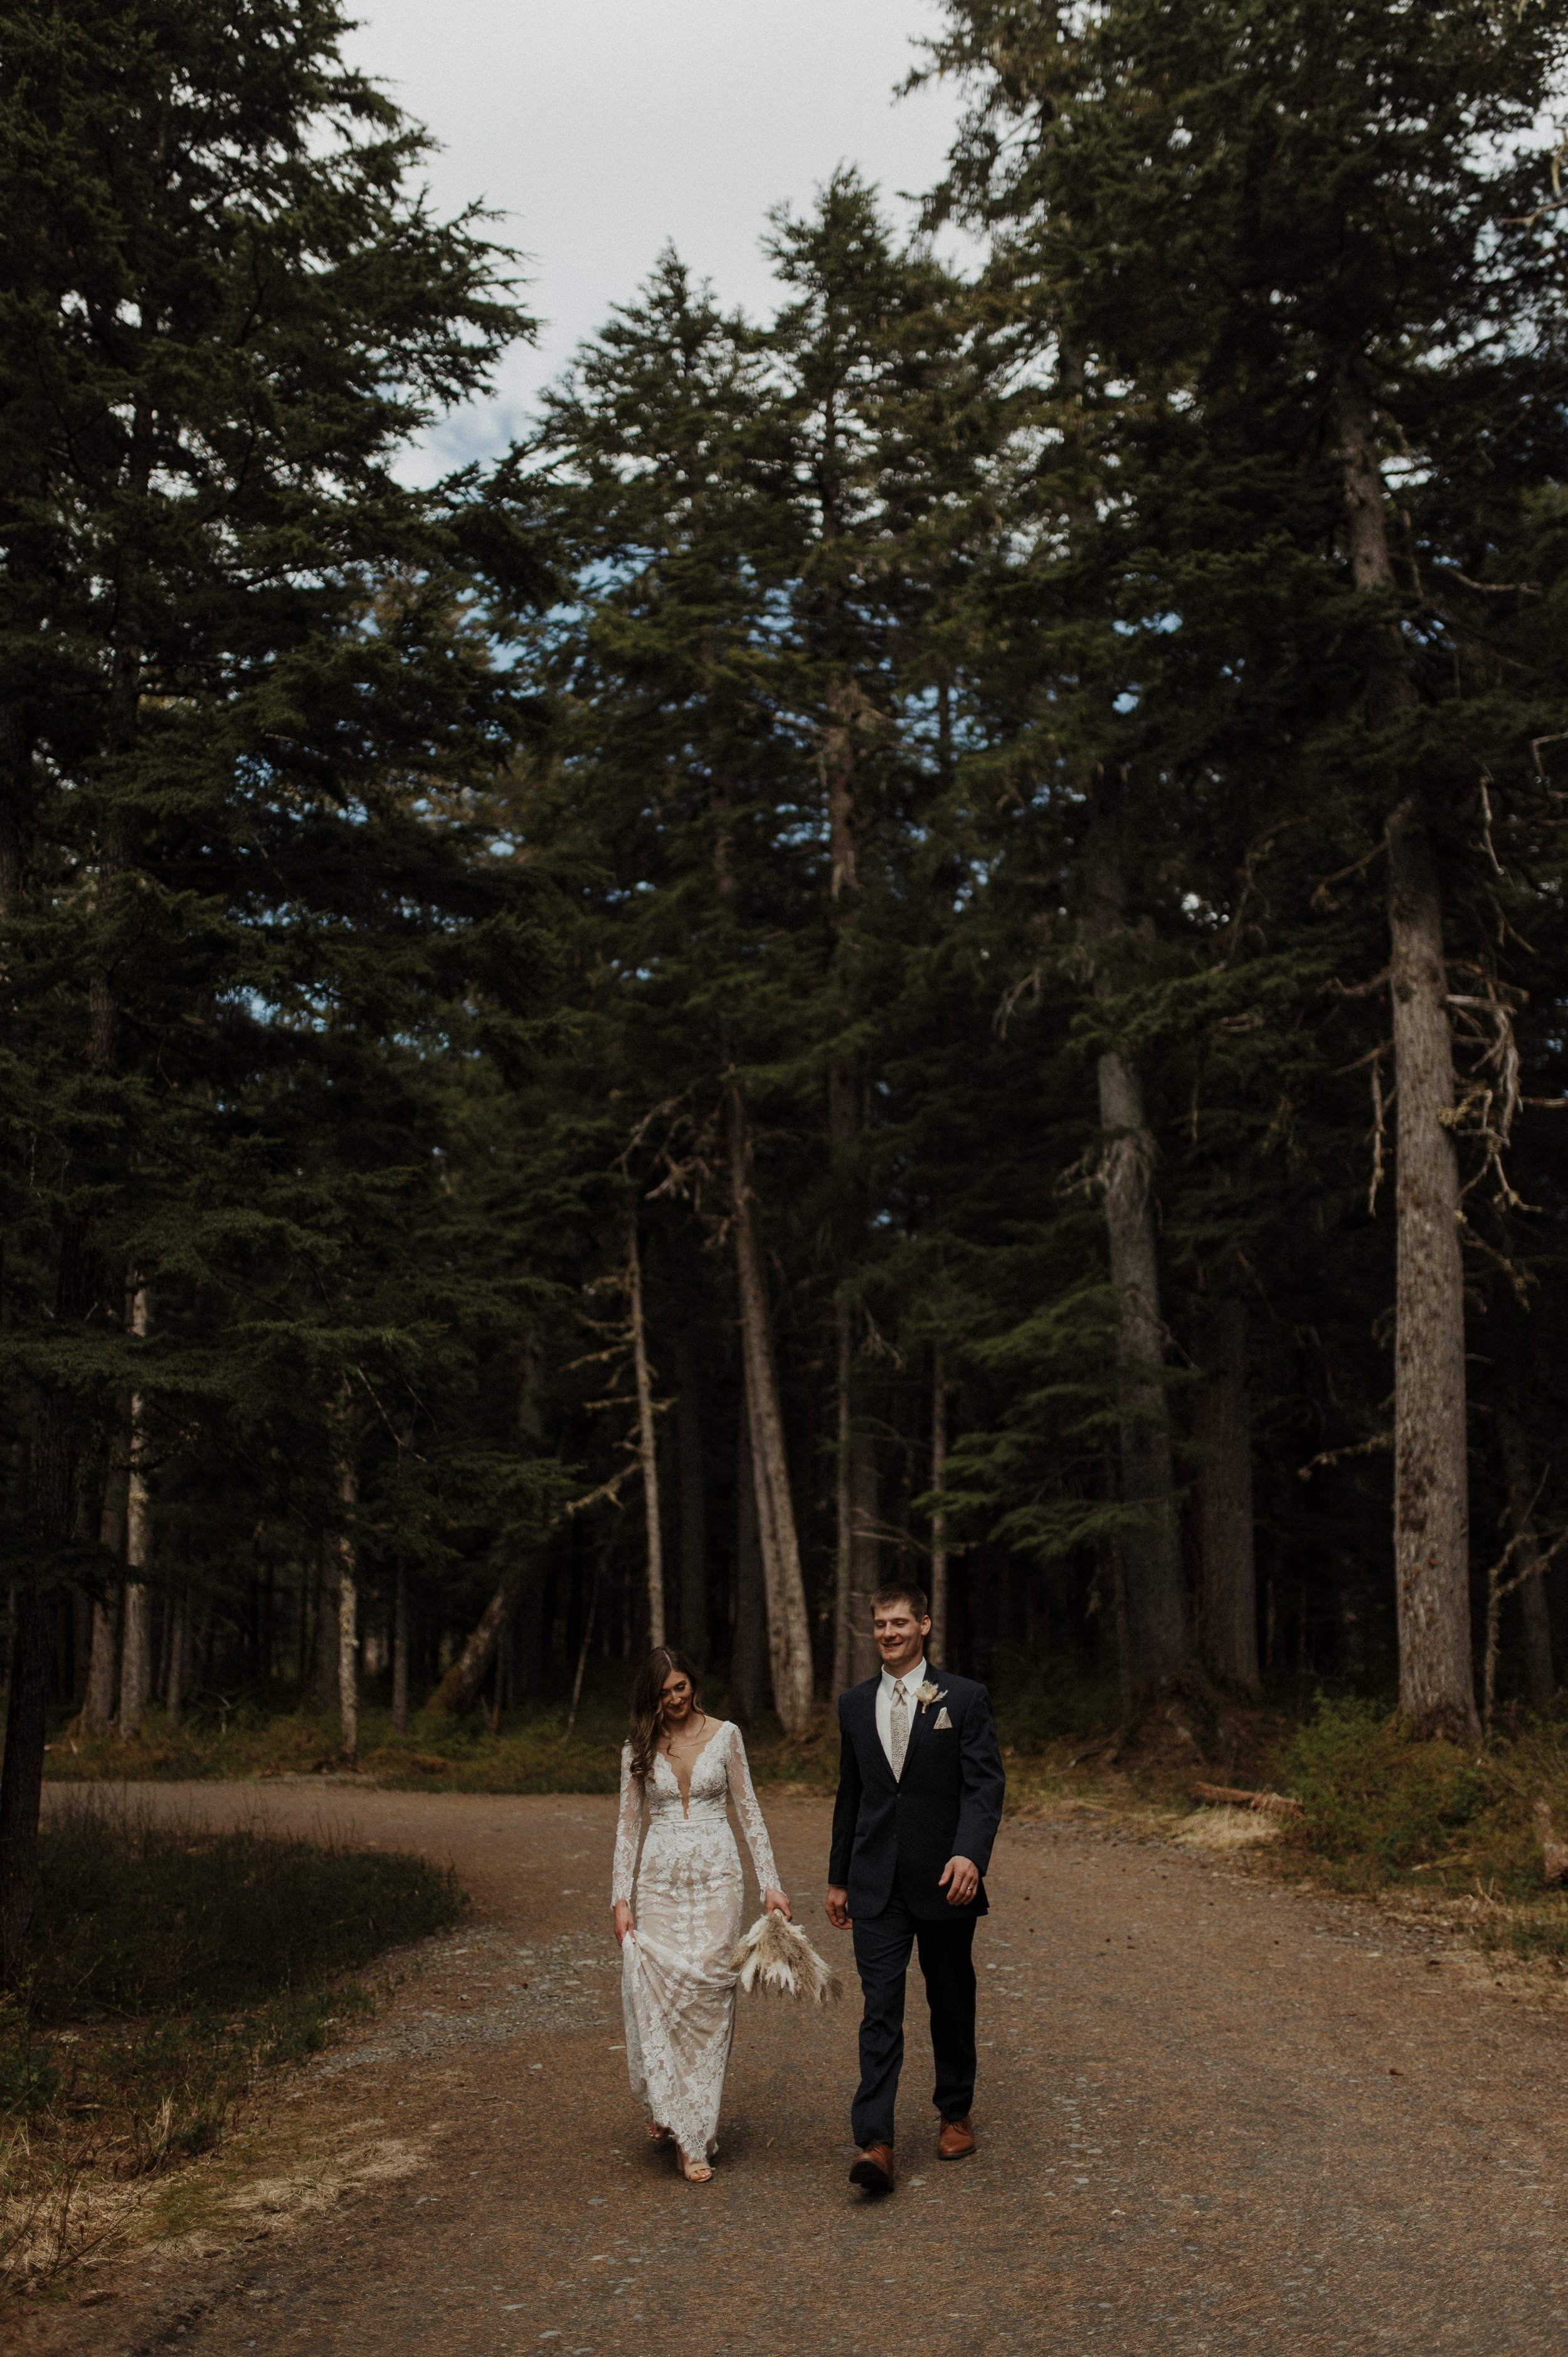 MOUNTAIN WEDDING IN THE SUMMER | GIRDWOOD, ALASKA